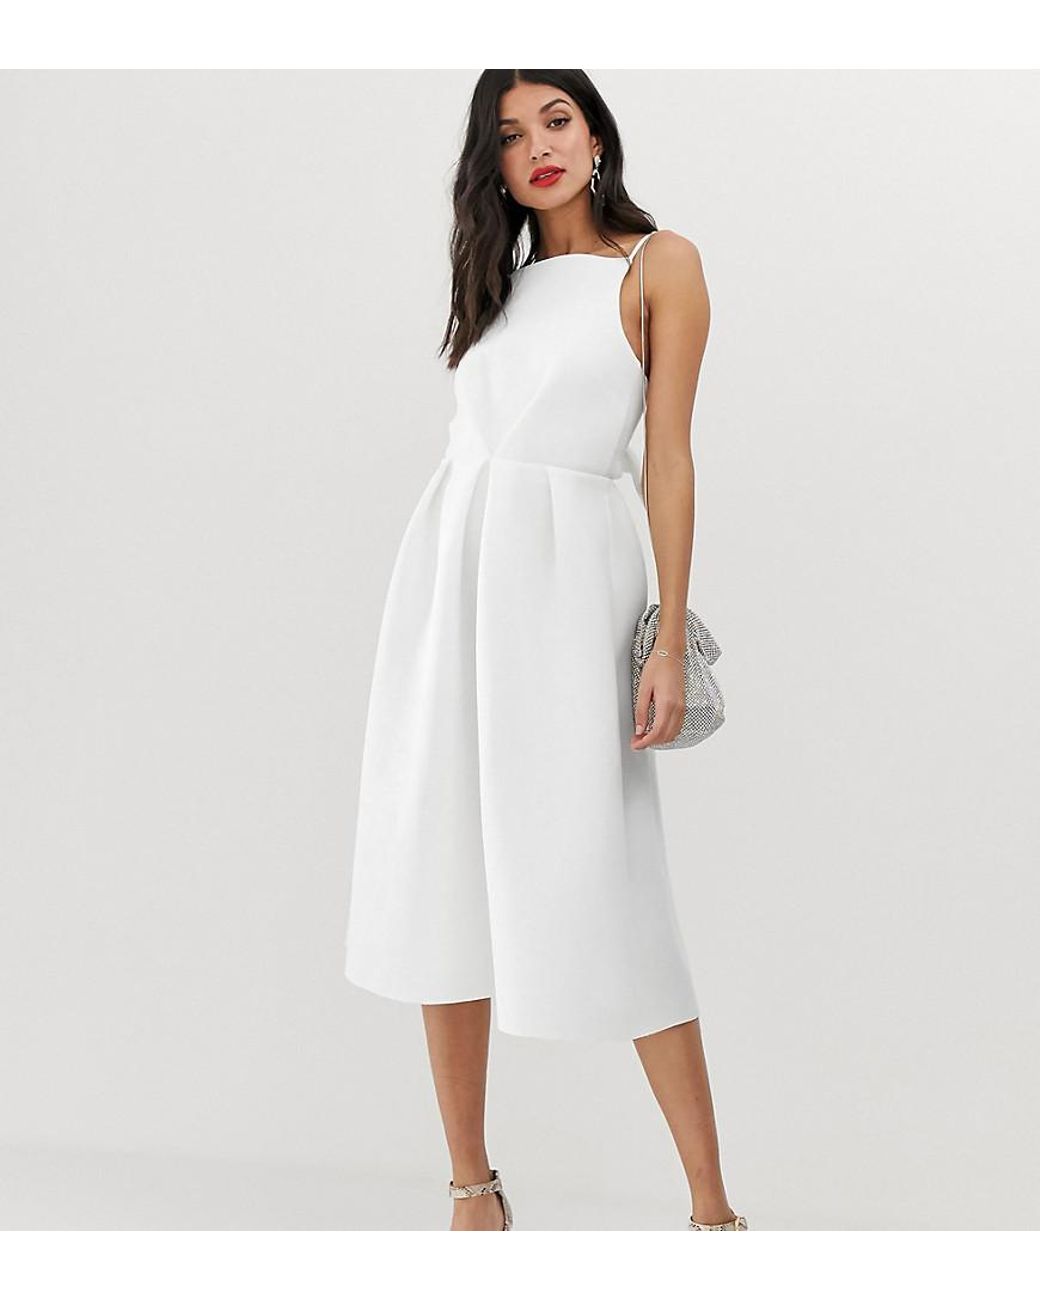 ASOS Asos Design Tall Bow Back Midi Prom Dress in White - Lyst